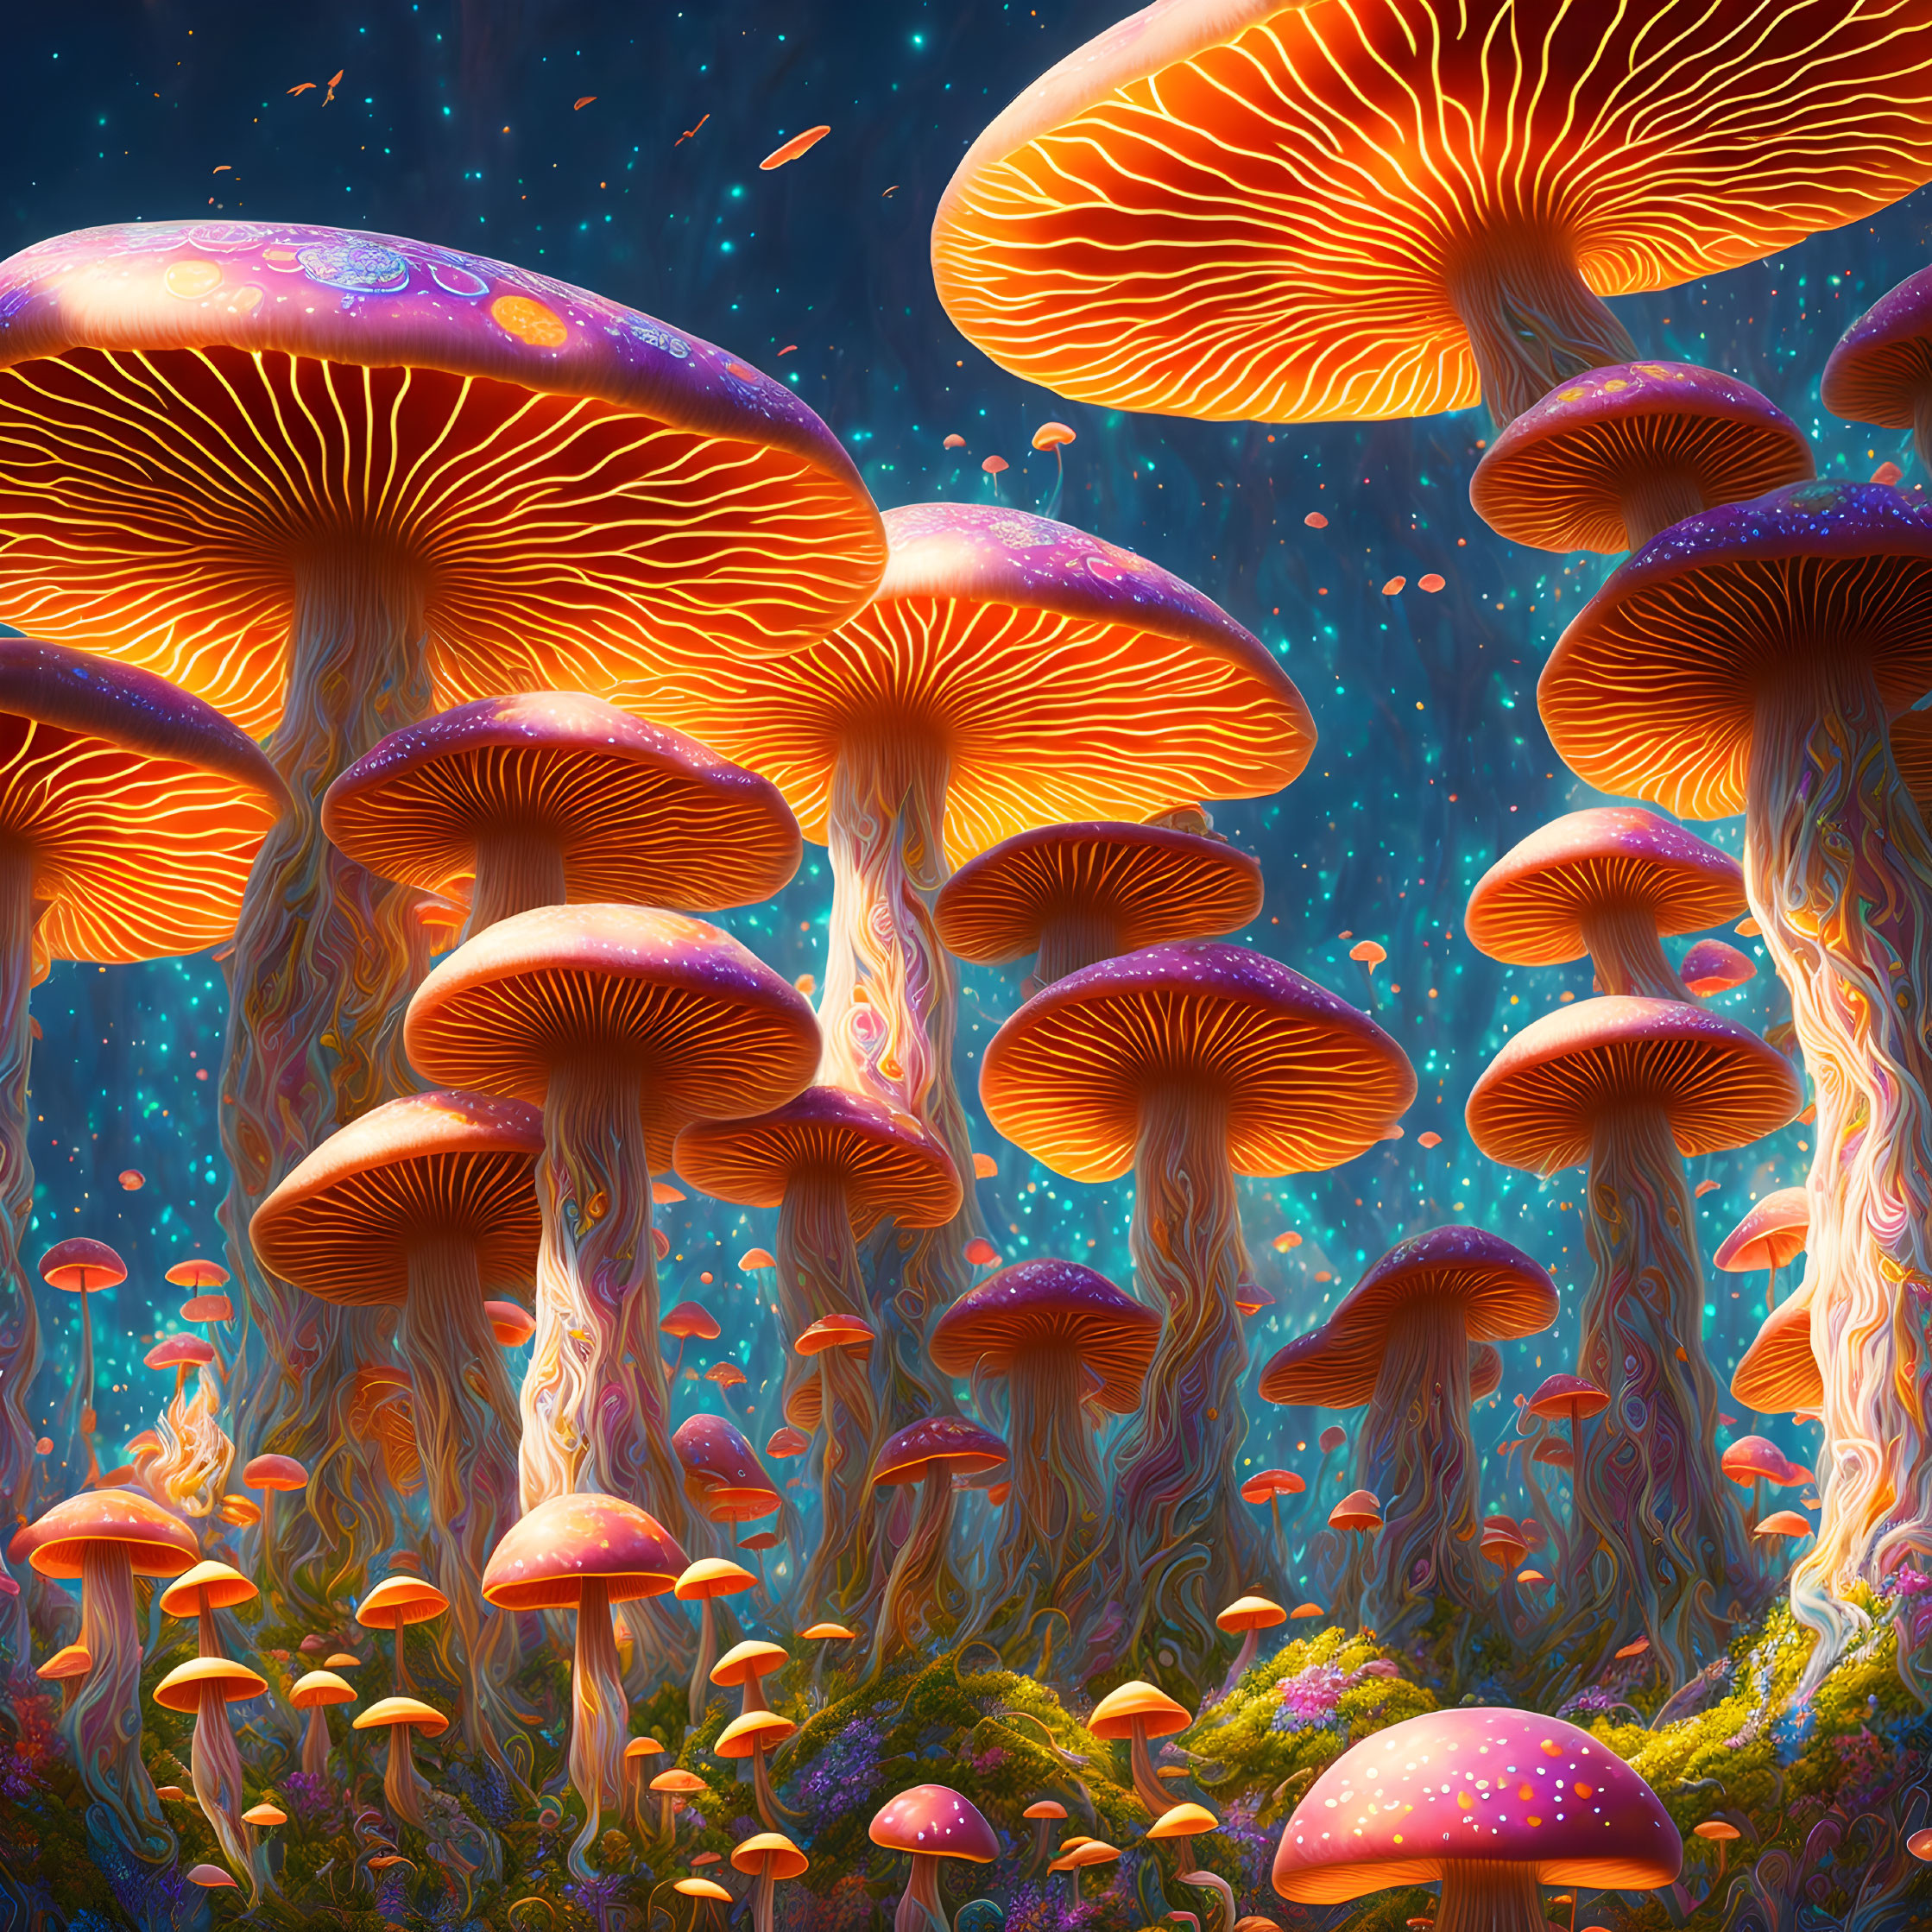 A Living Mushroom Forest 